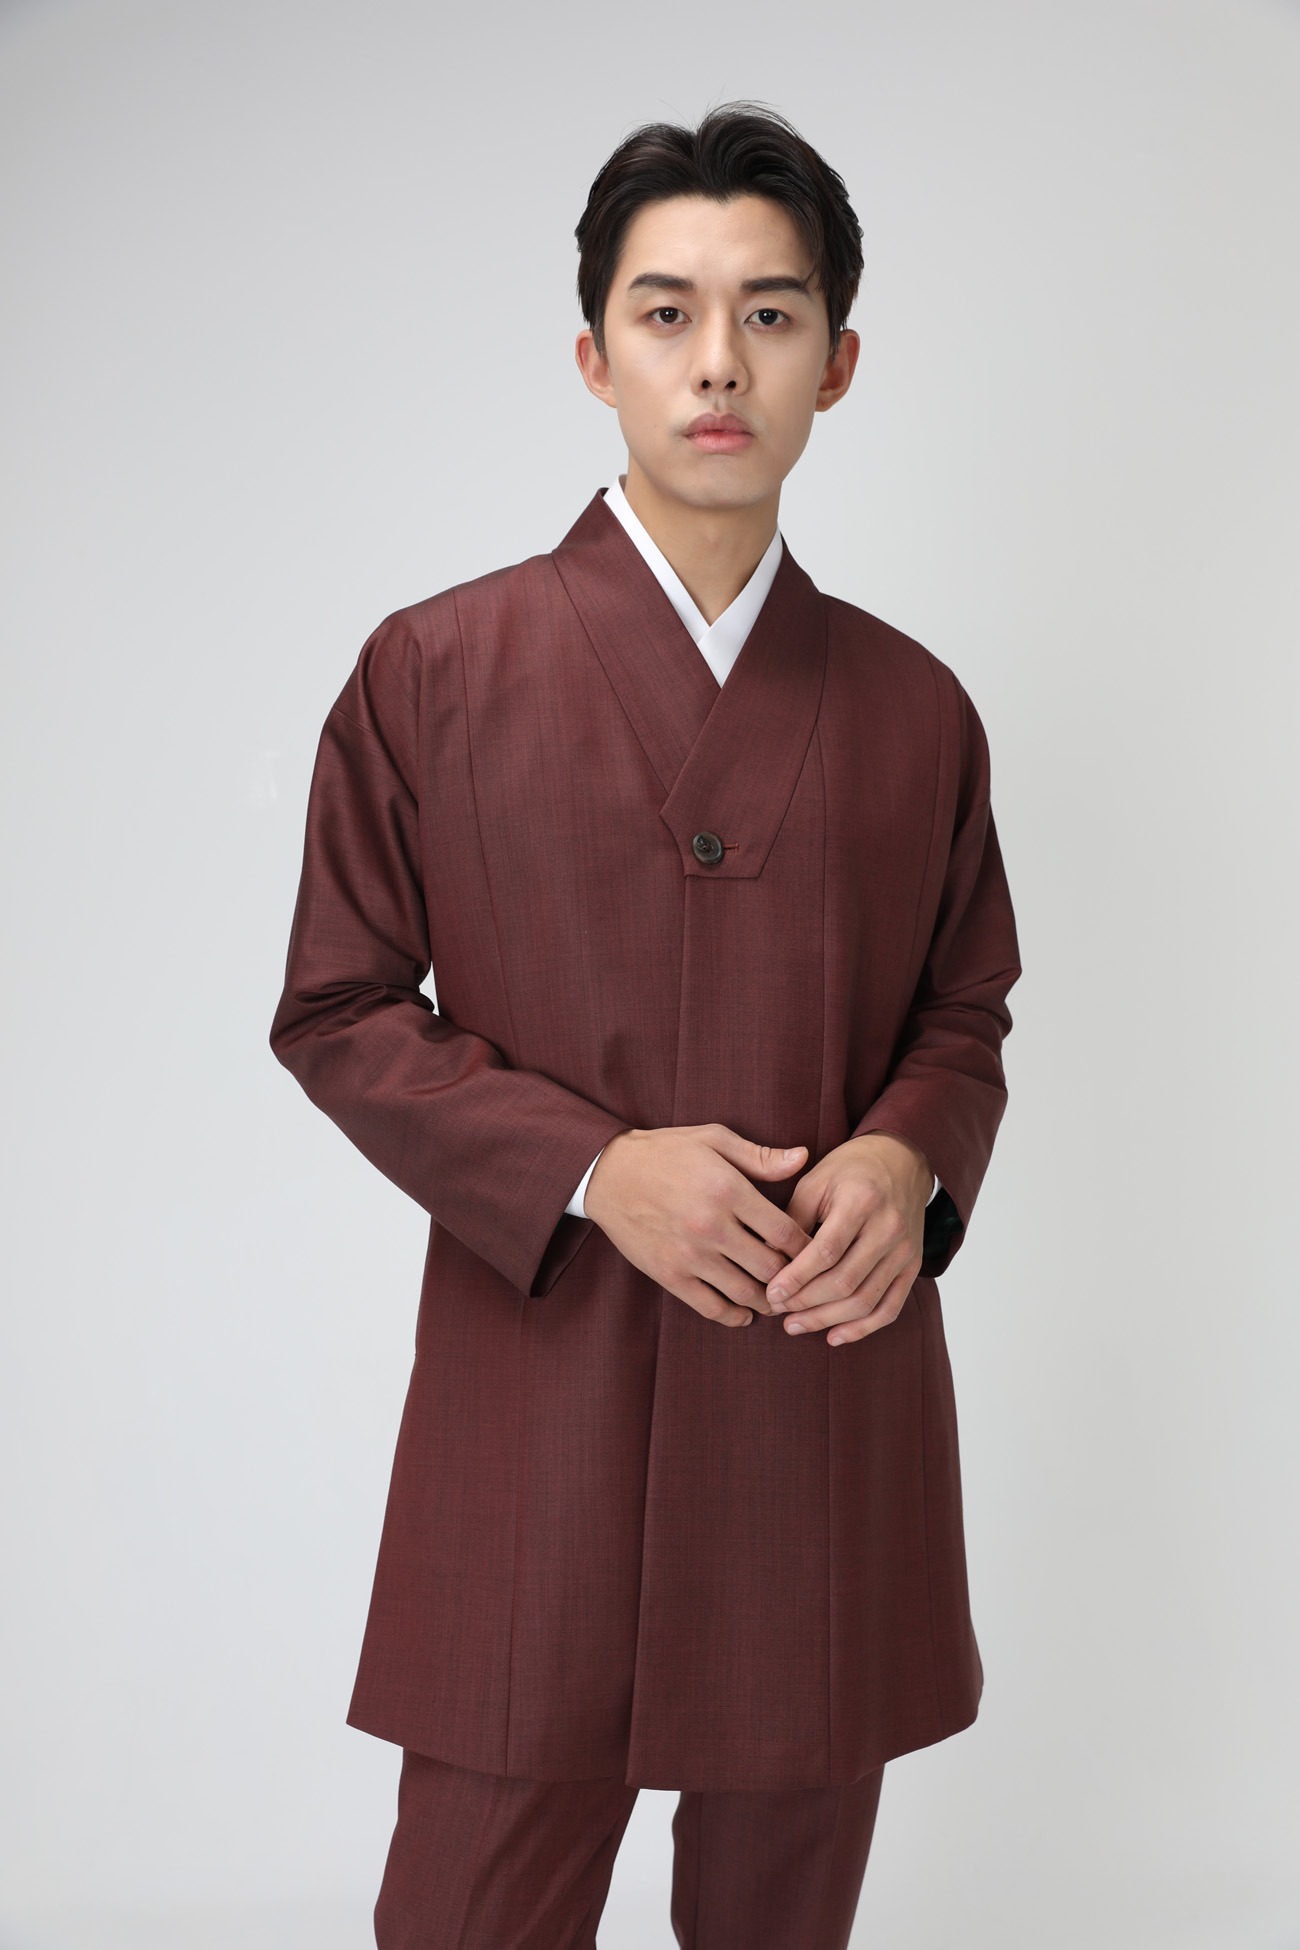 Fastened Collar Long Hanbok Suit Jacket - Burgundy